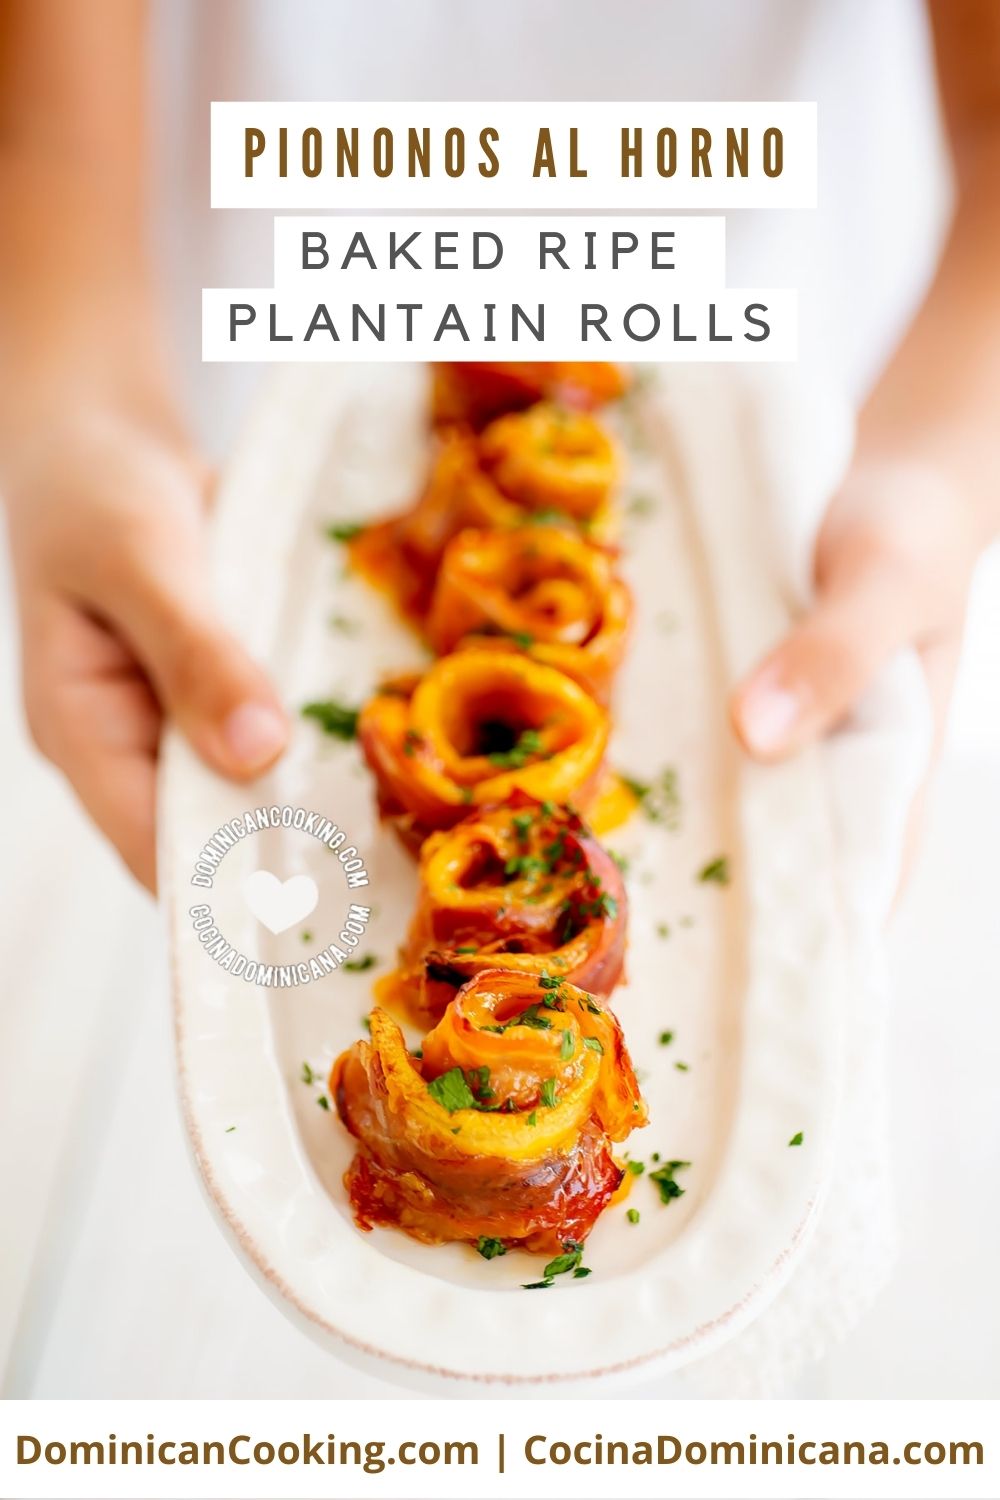 Baked ripe plantain rolls (no frying piononos) recipe.